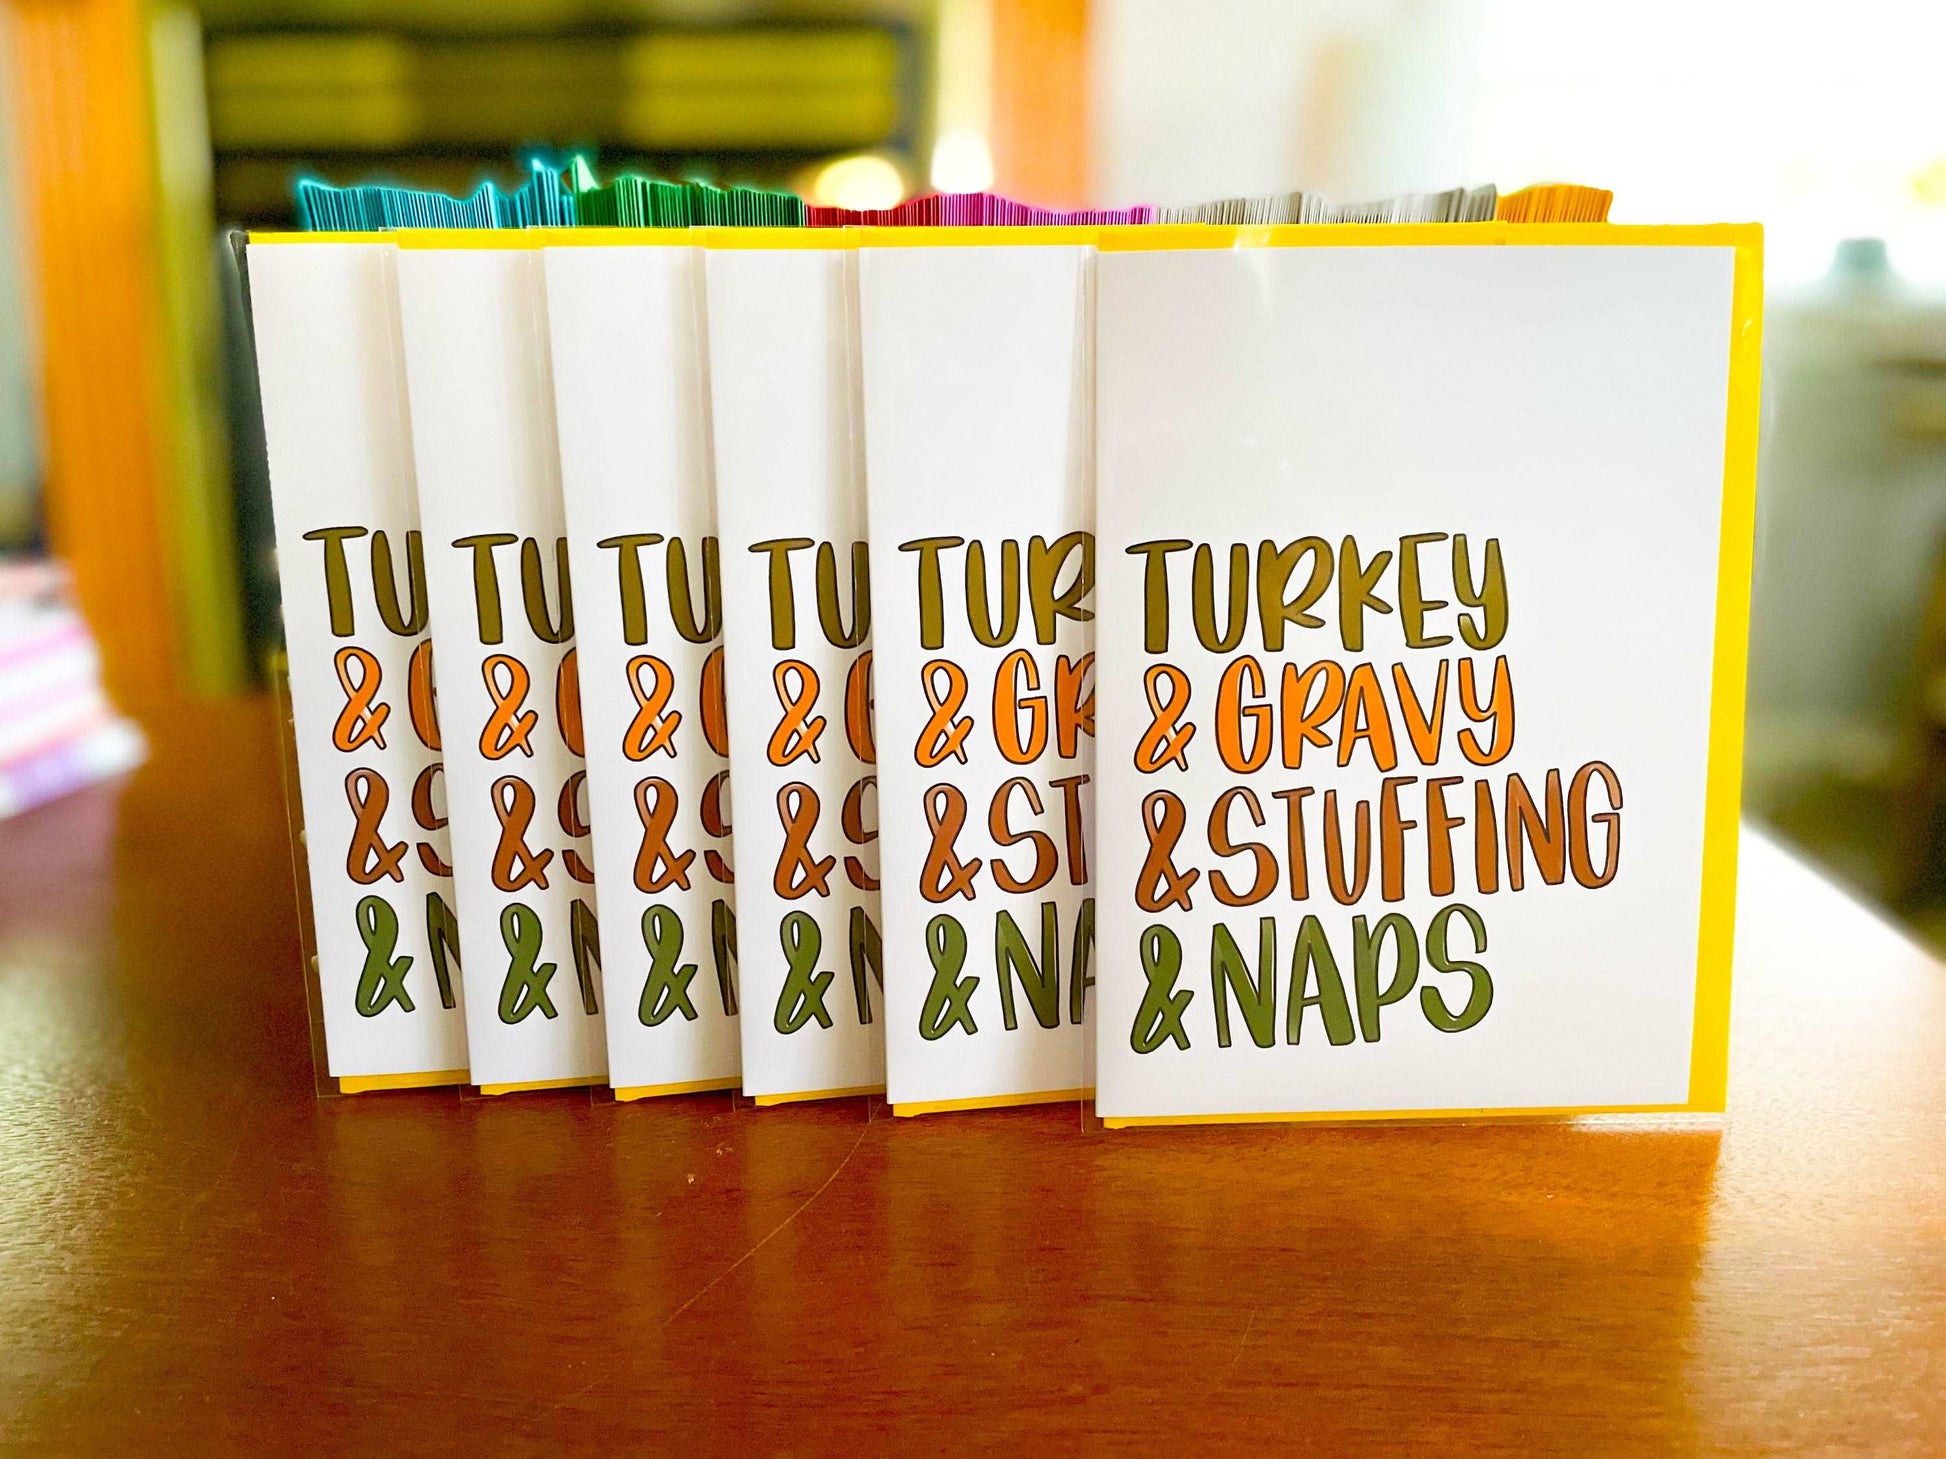 Fun Thanksgiving Card - Turkey Gravy Stuffing Naps by StoneDonut Design